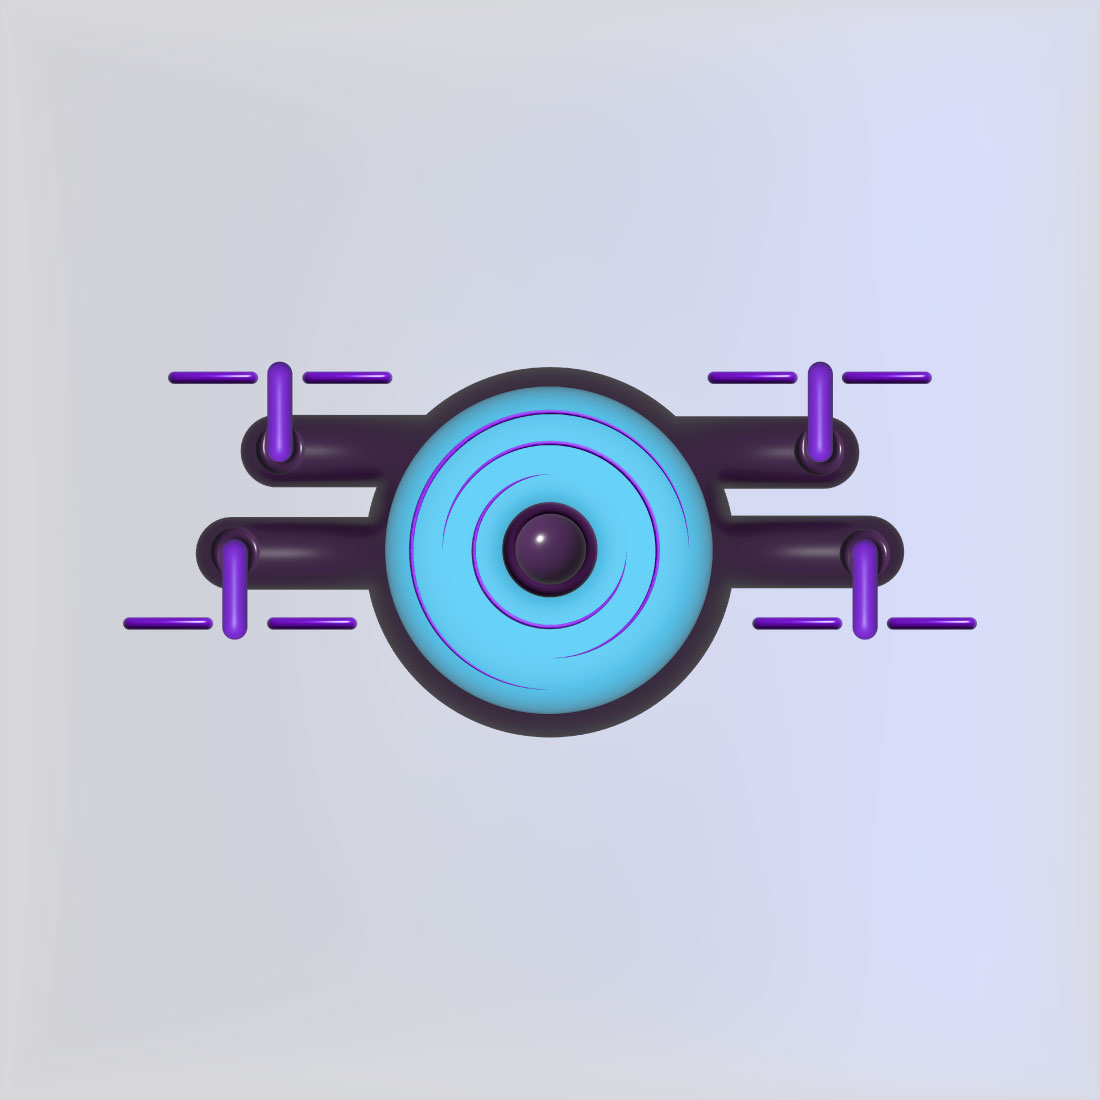 Creative Drone Logo cover image.